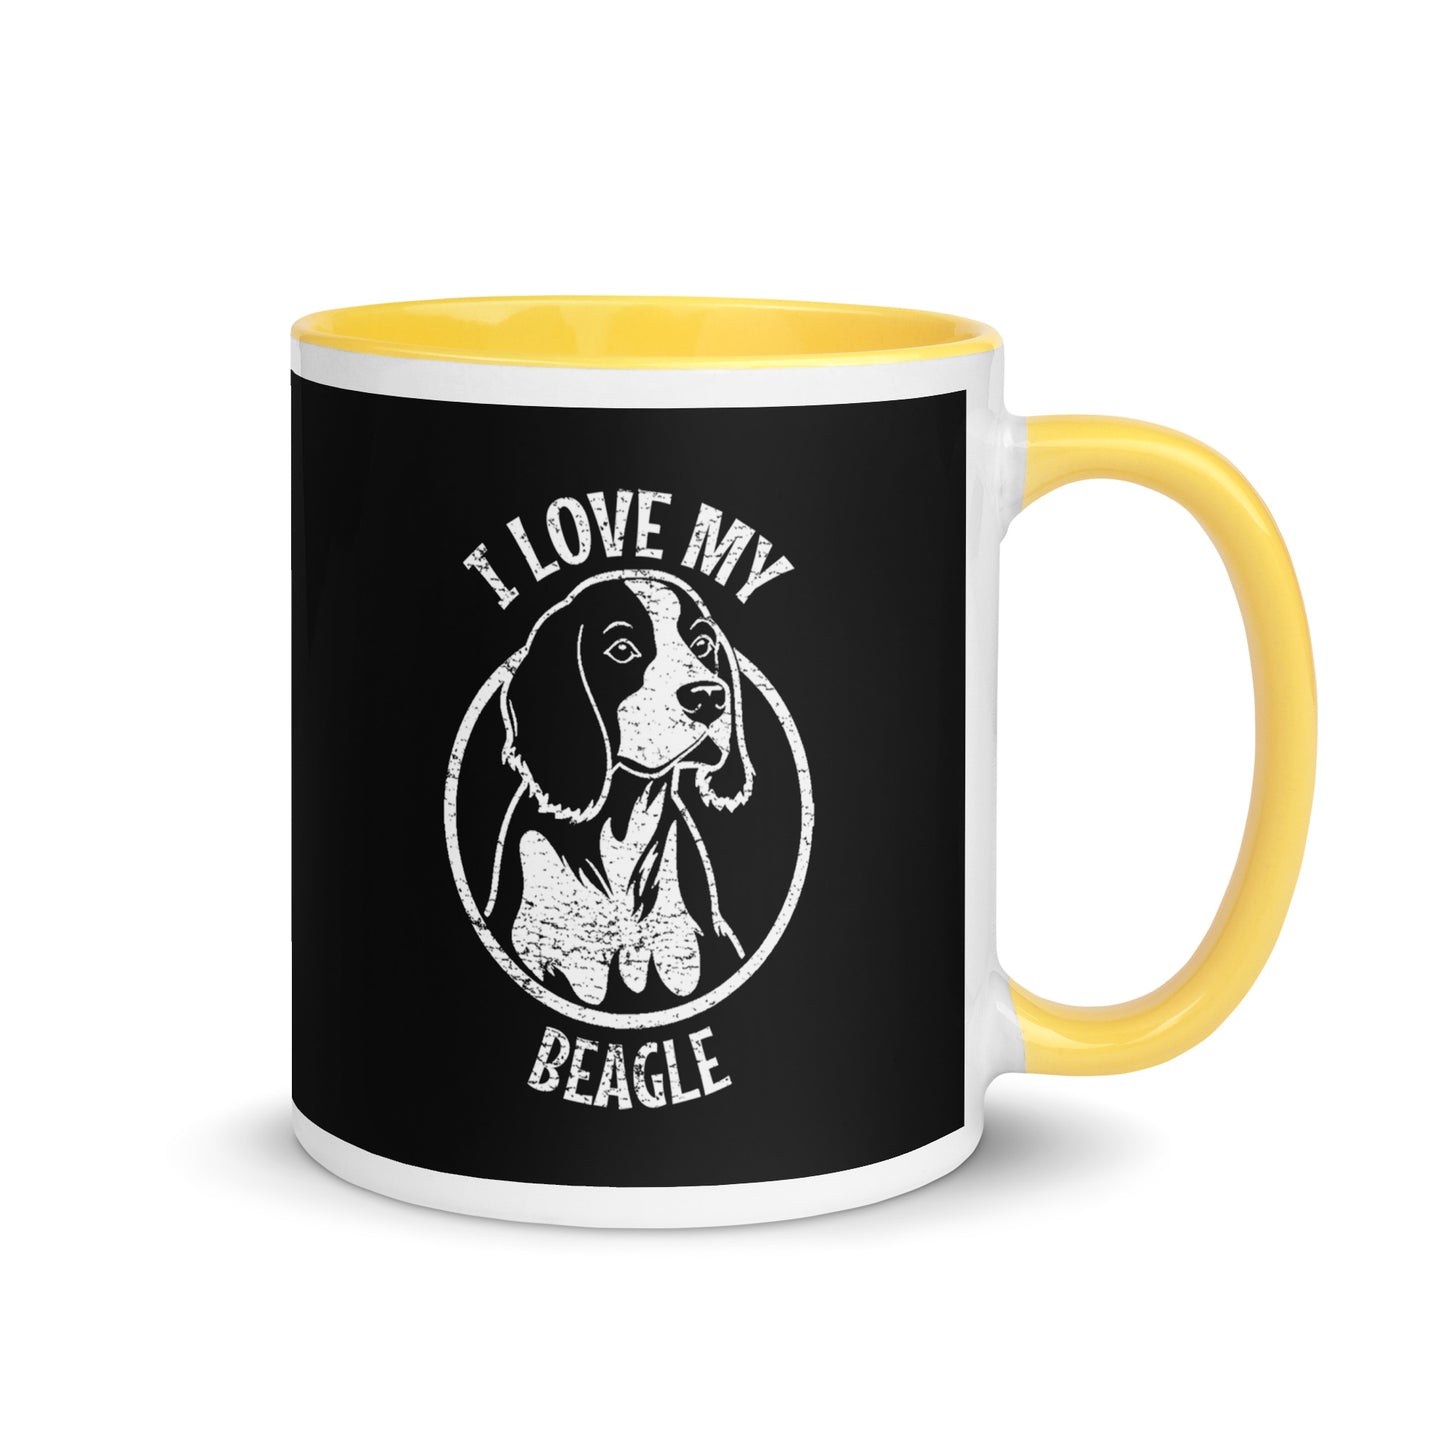 Beagle Mug, Beagle gift, gift for dog mom, custom dog gift, dog owner gift, pet memorial gift